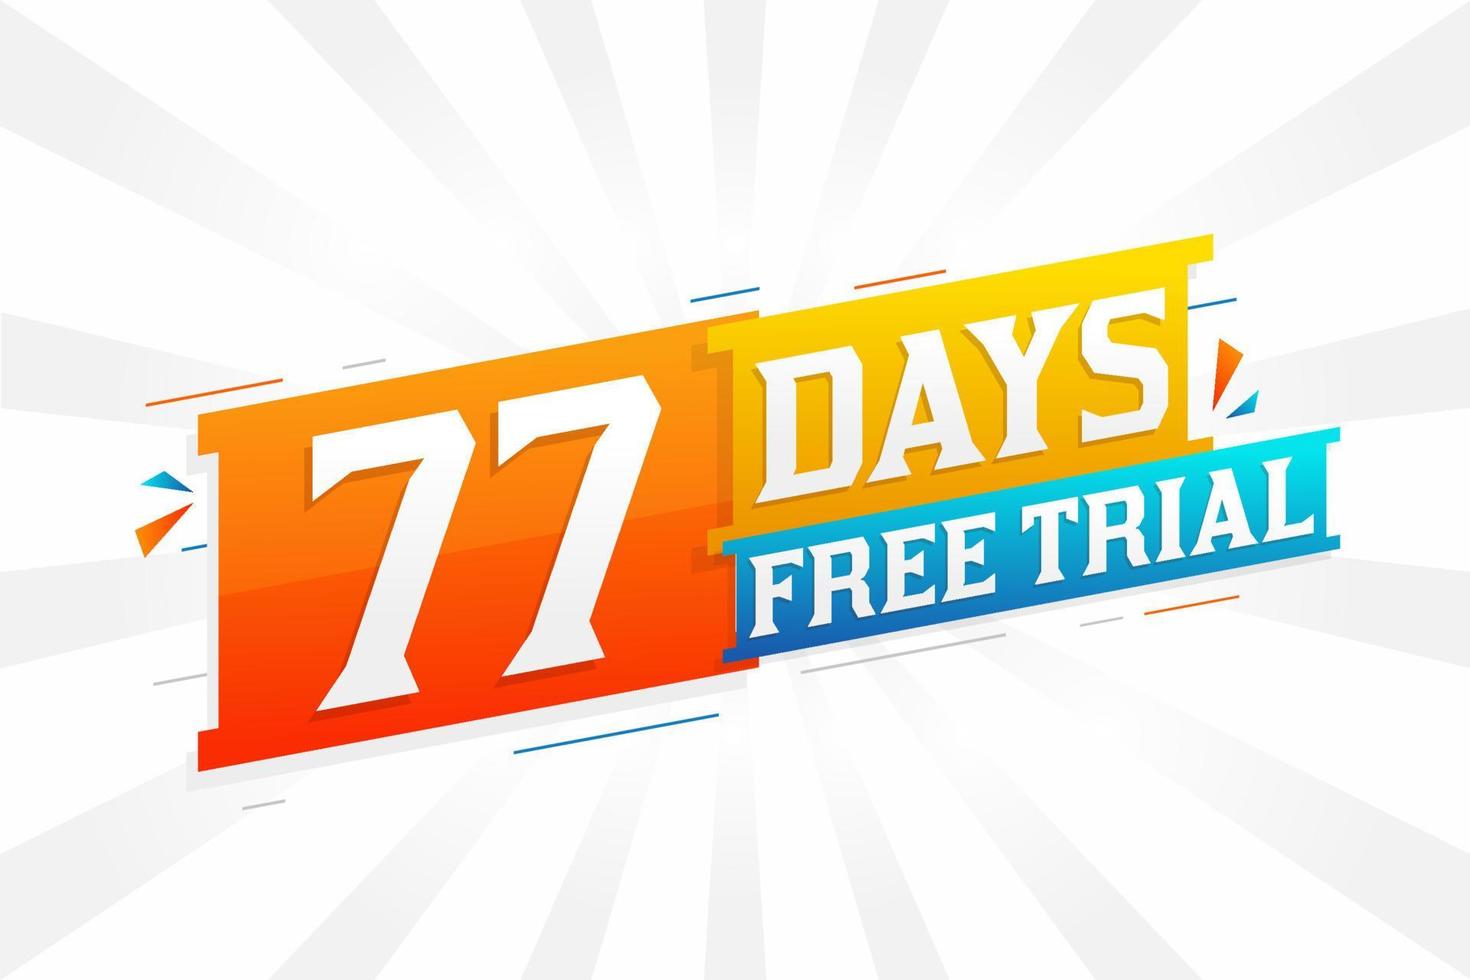 Vector de stock de texto en negrita promocional de prueba gratuita de 77 días